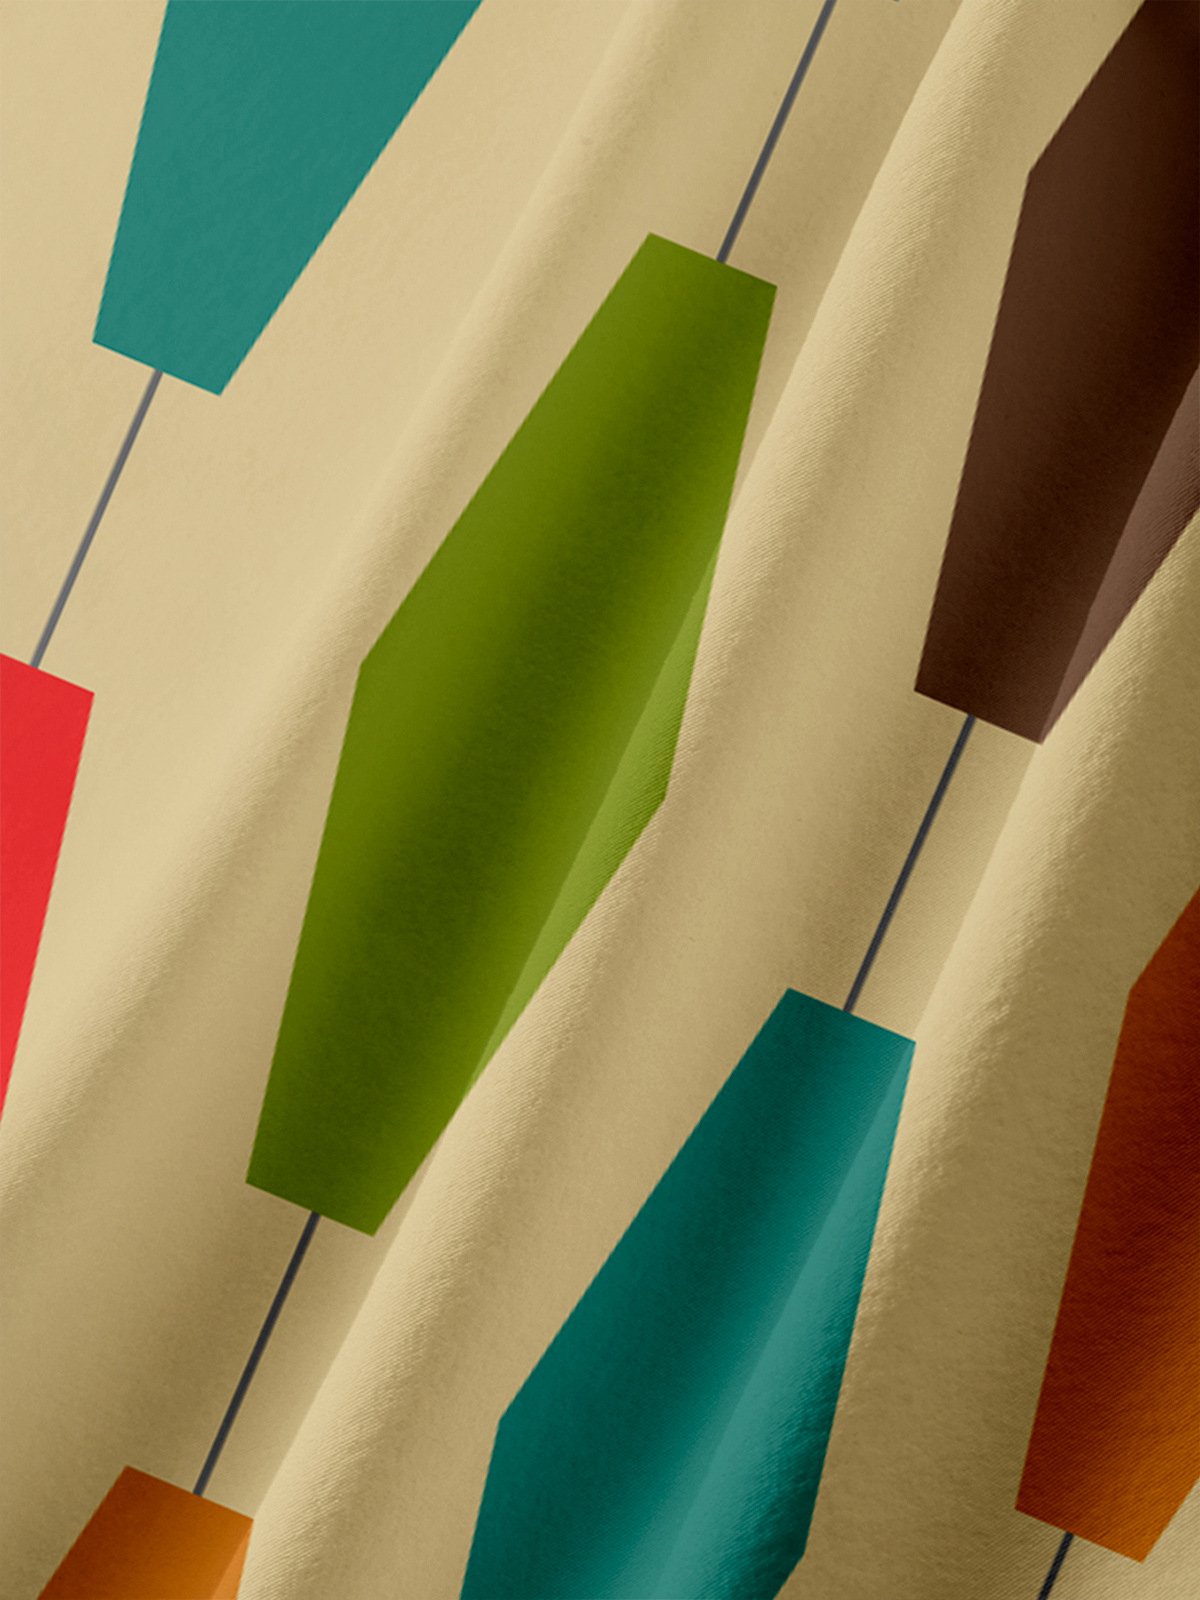 Casual Art Collection Geometric Color Block Pattern Lapel Short Sleeve Chest Pocket Shirt Print Top